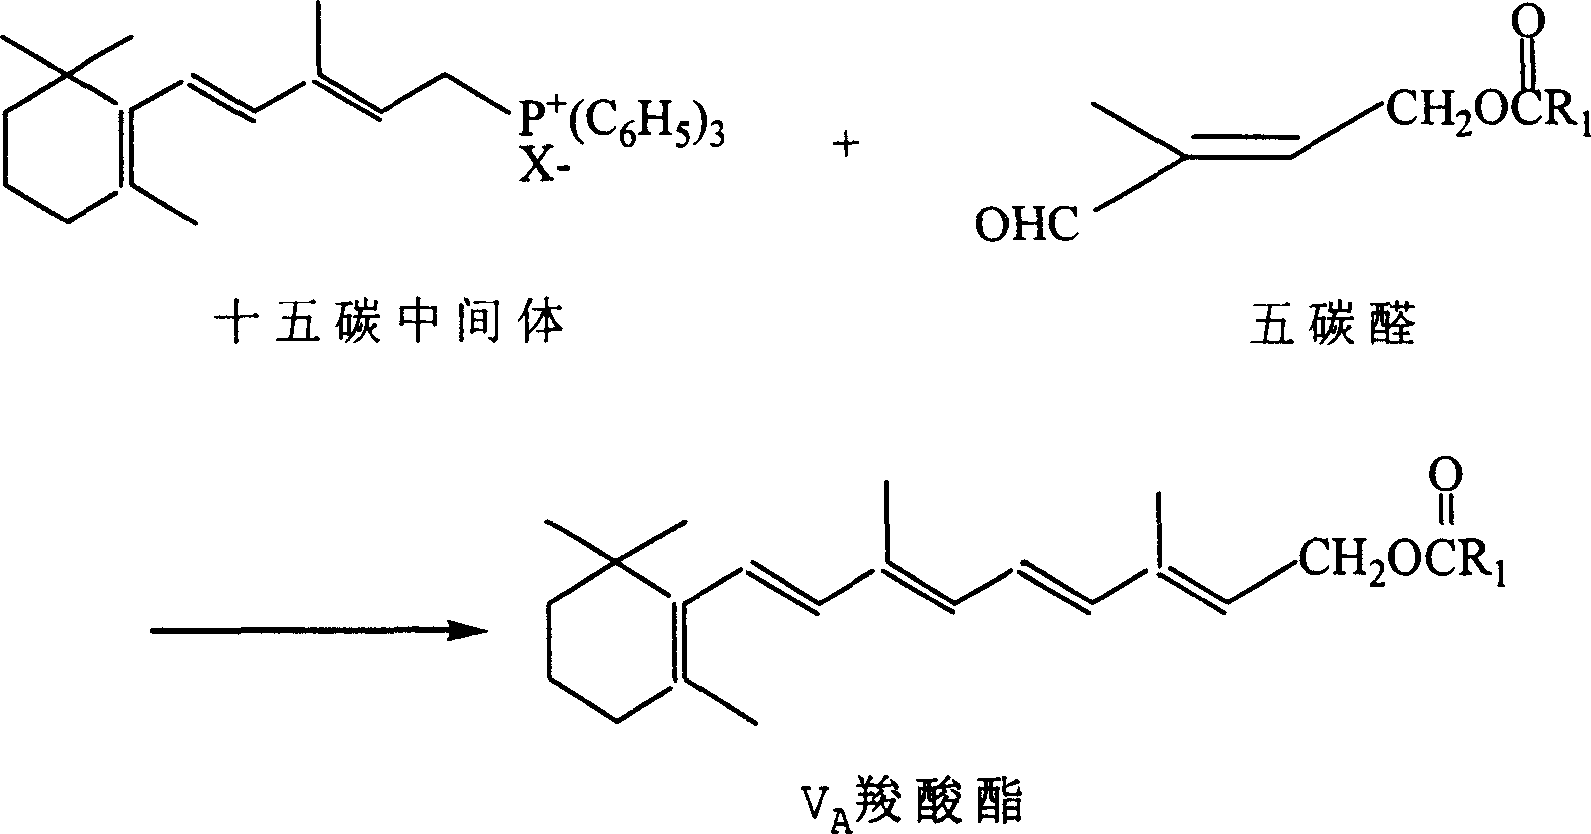 Method for preparing 1-chloro-2-methyl-4-alkylacyloxy-2-butene